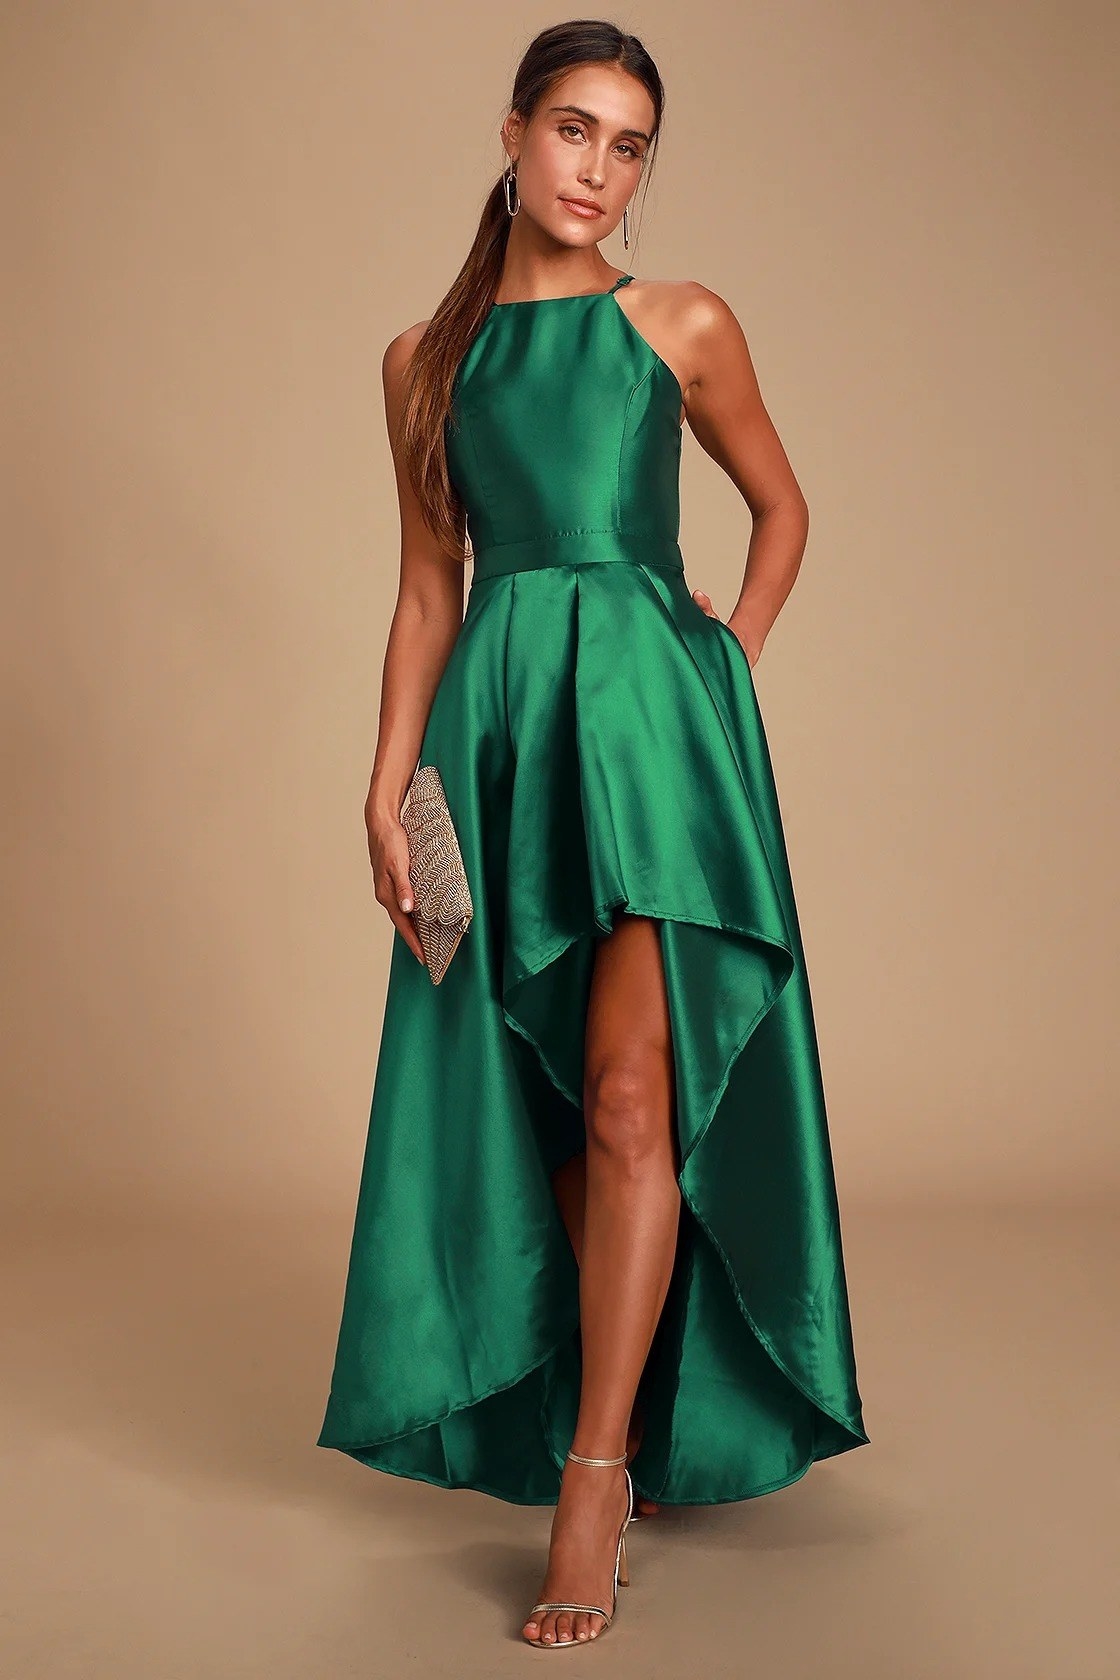 a model wearing the dress in emerald green